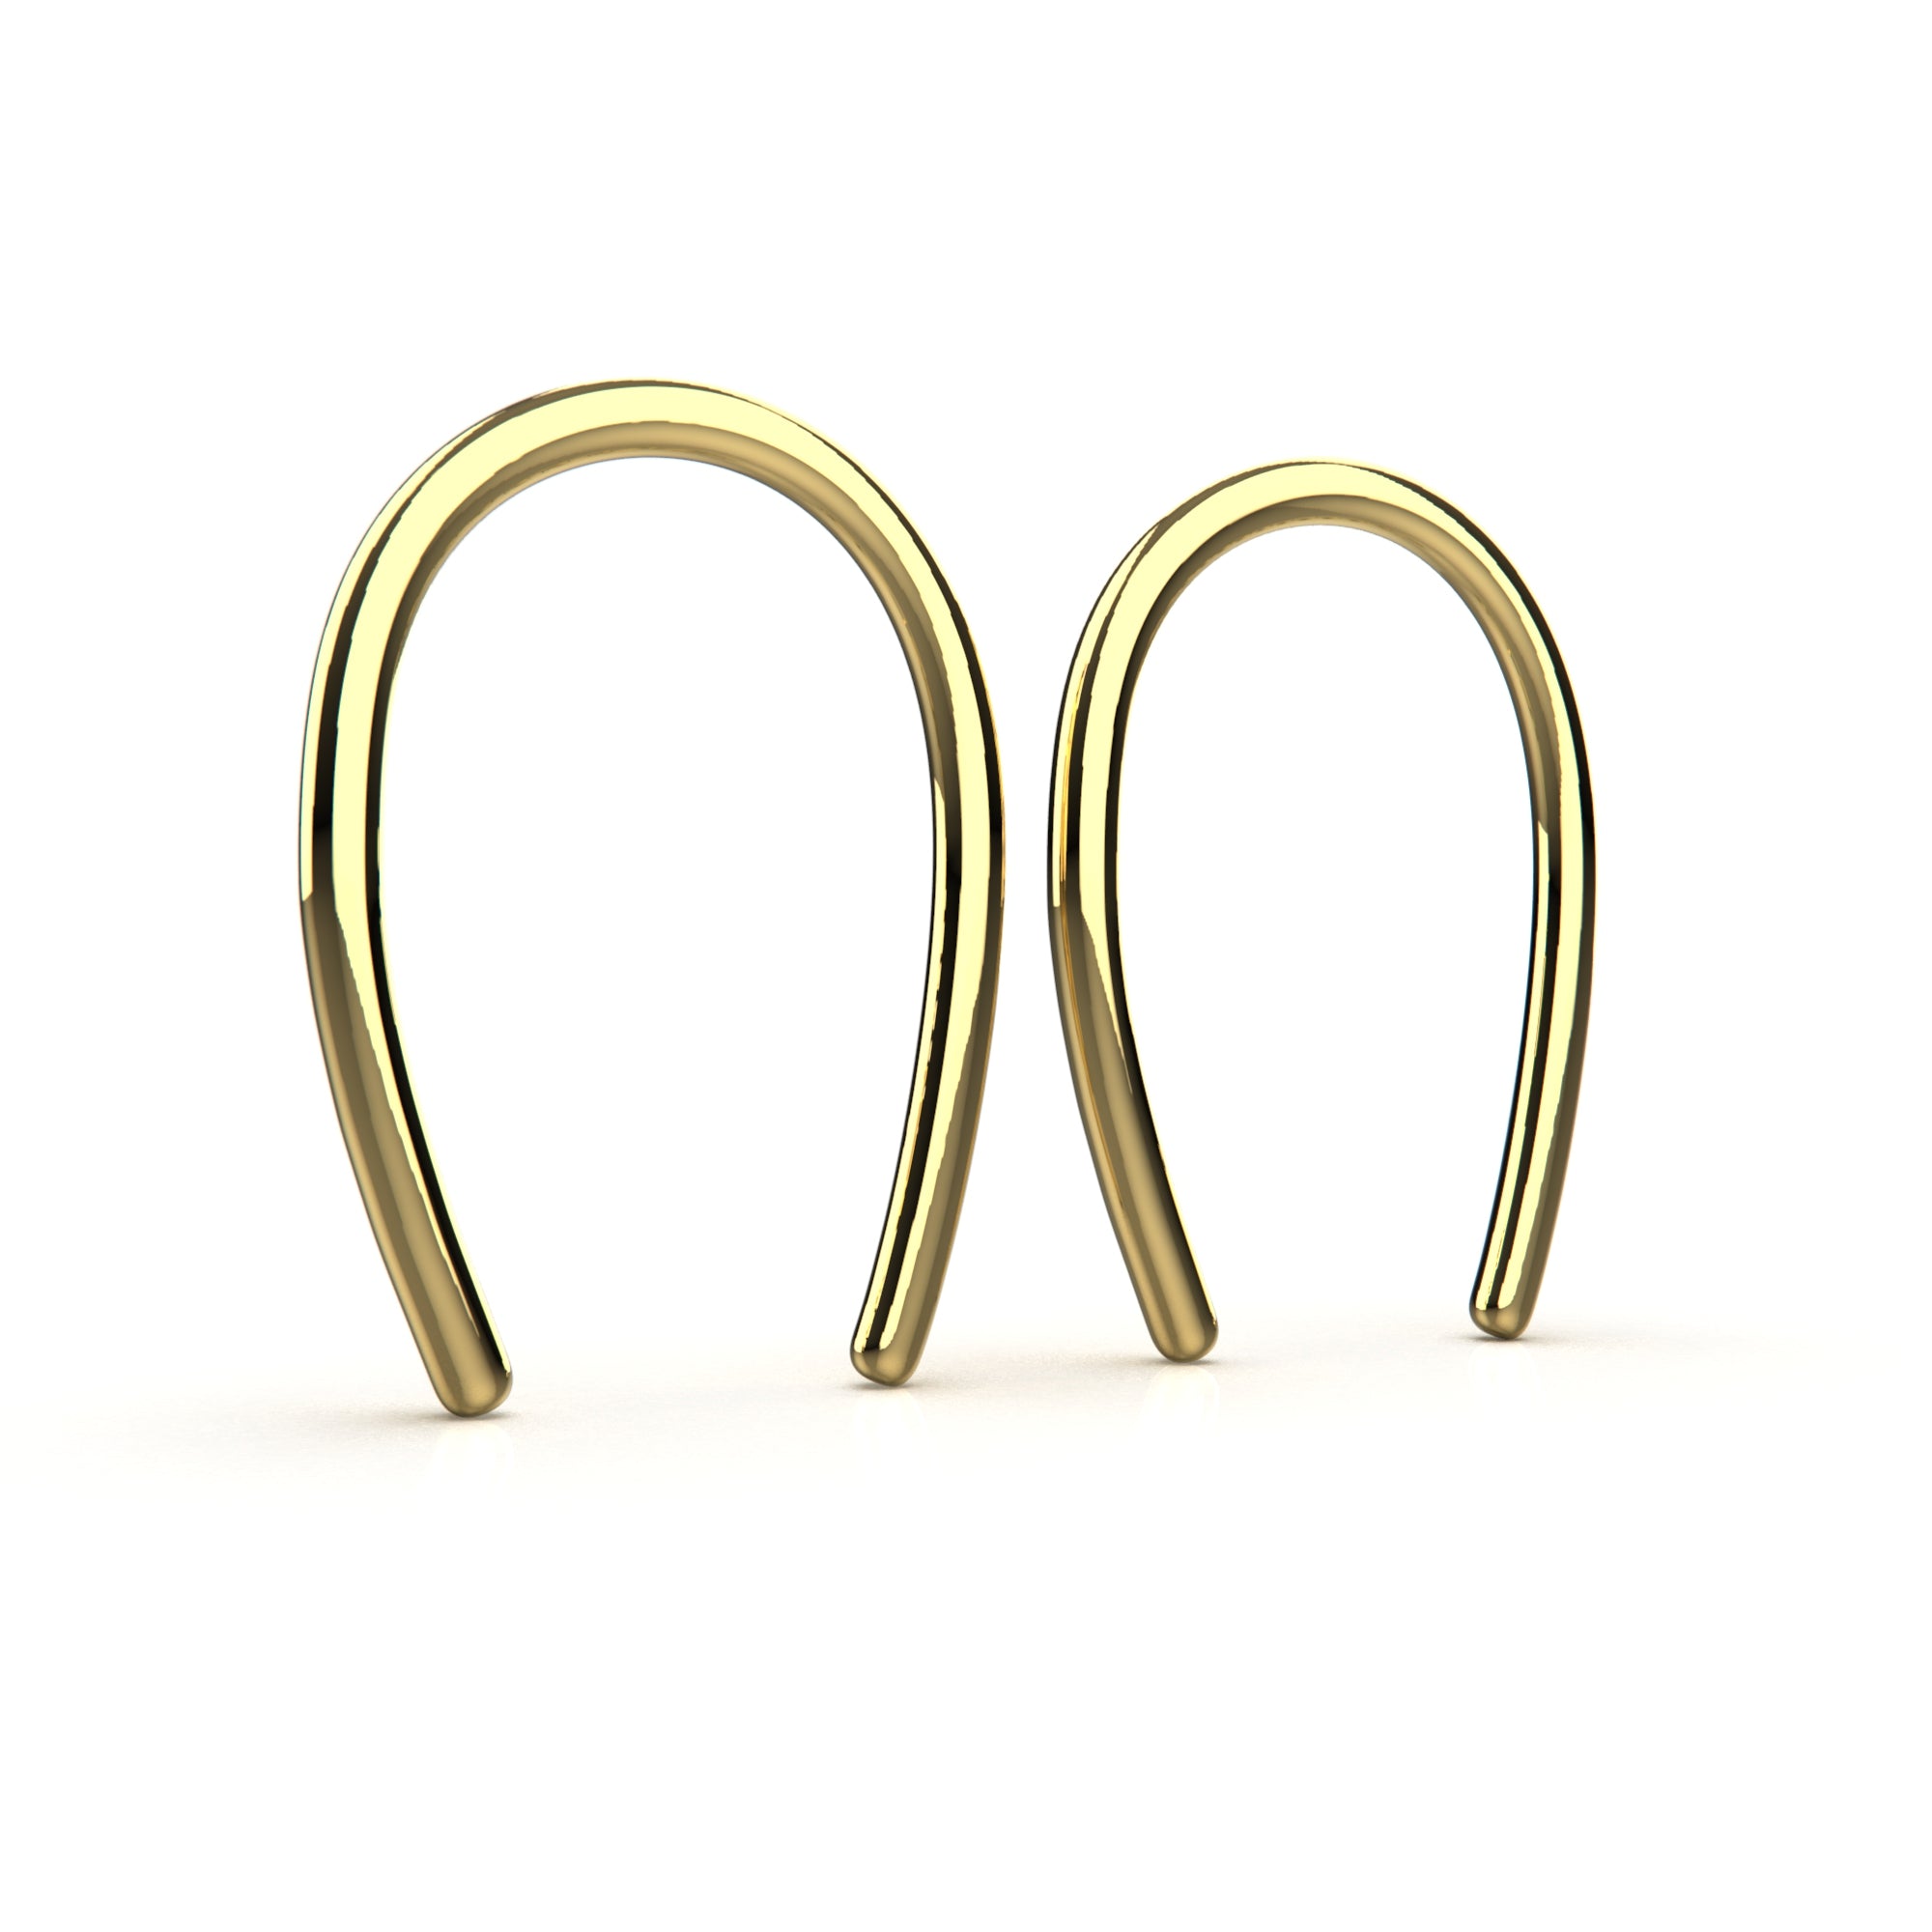 Tiny Horseshoe Pull Through Hoop Earrings - Melanie Golden Jewelry - _badge_bestseller, bestseller, earrings, everyday essentials, hoop earrings, hoops, threader, threader earrings, threaders